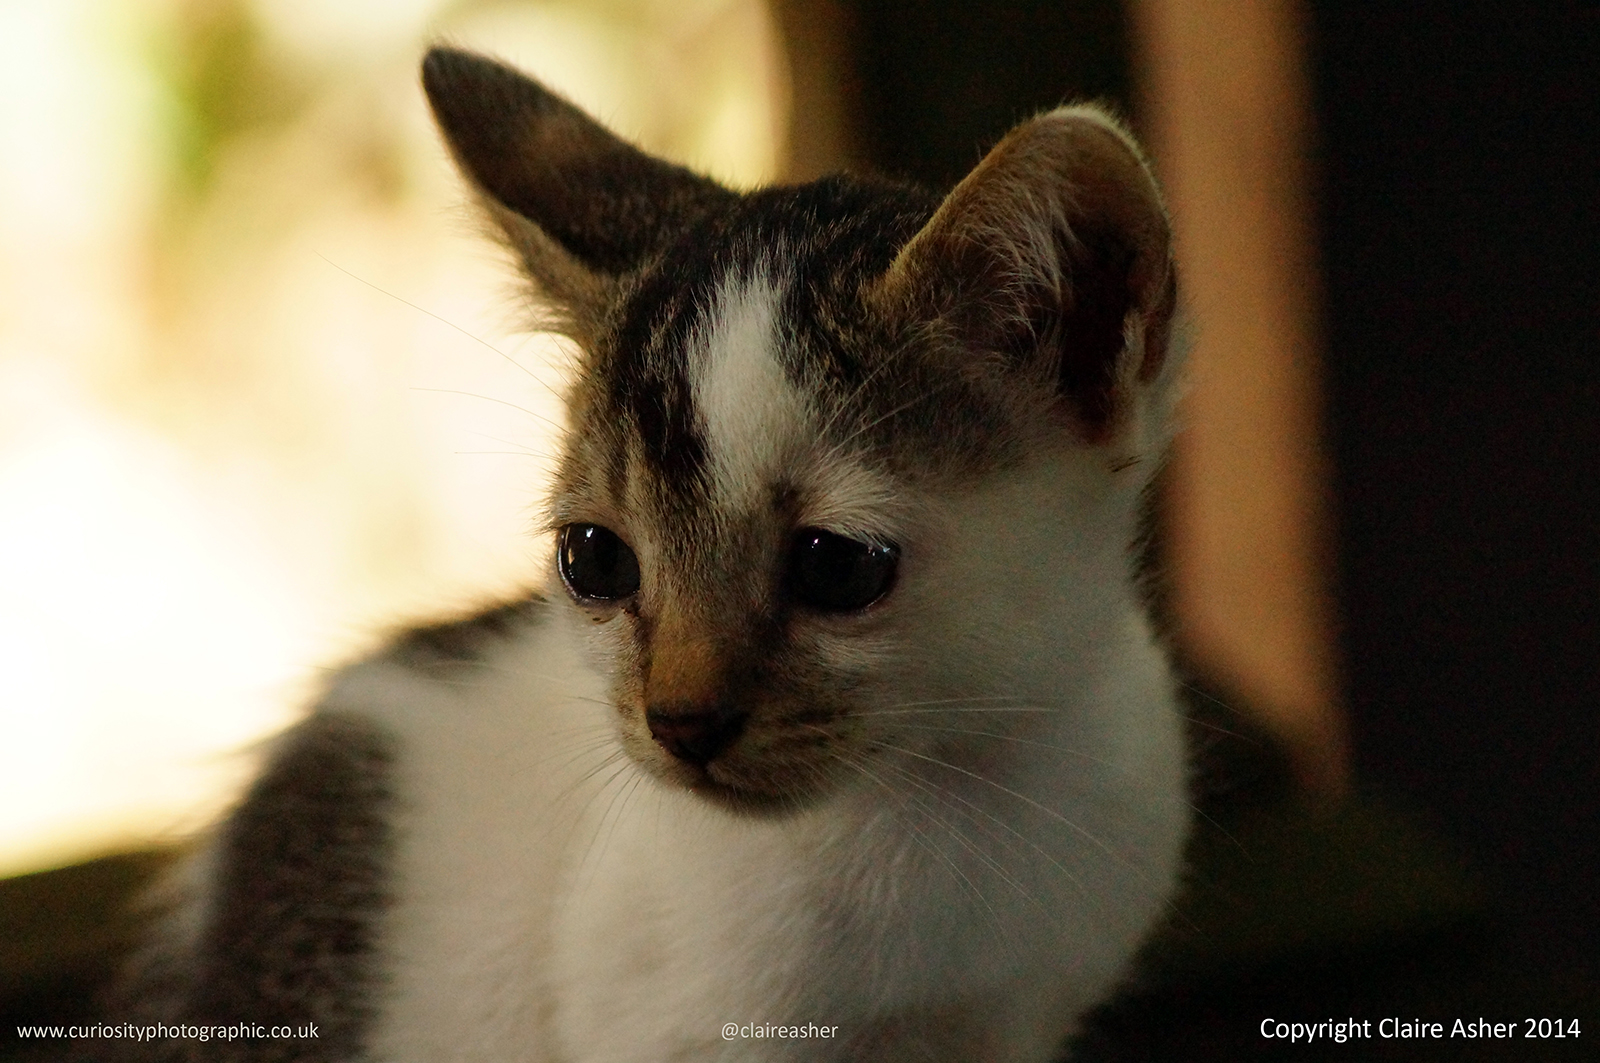 A kitten (Felis catus) photographed in Borneo, Malaysia in 2014.